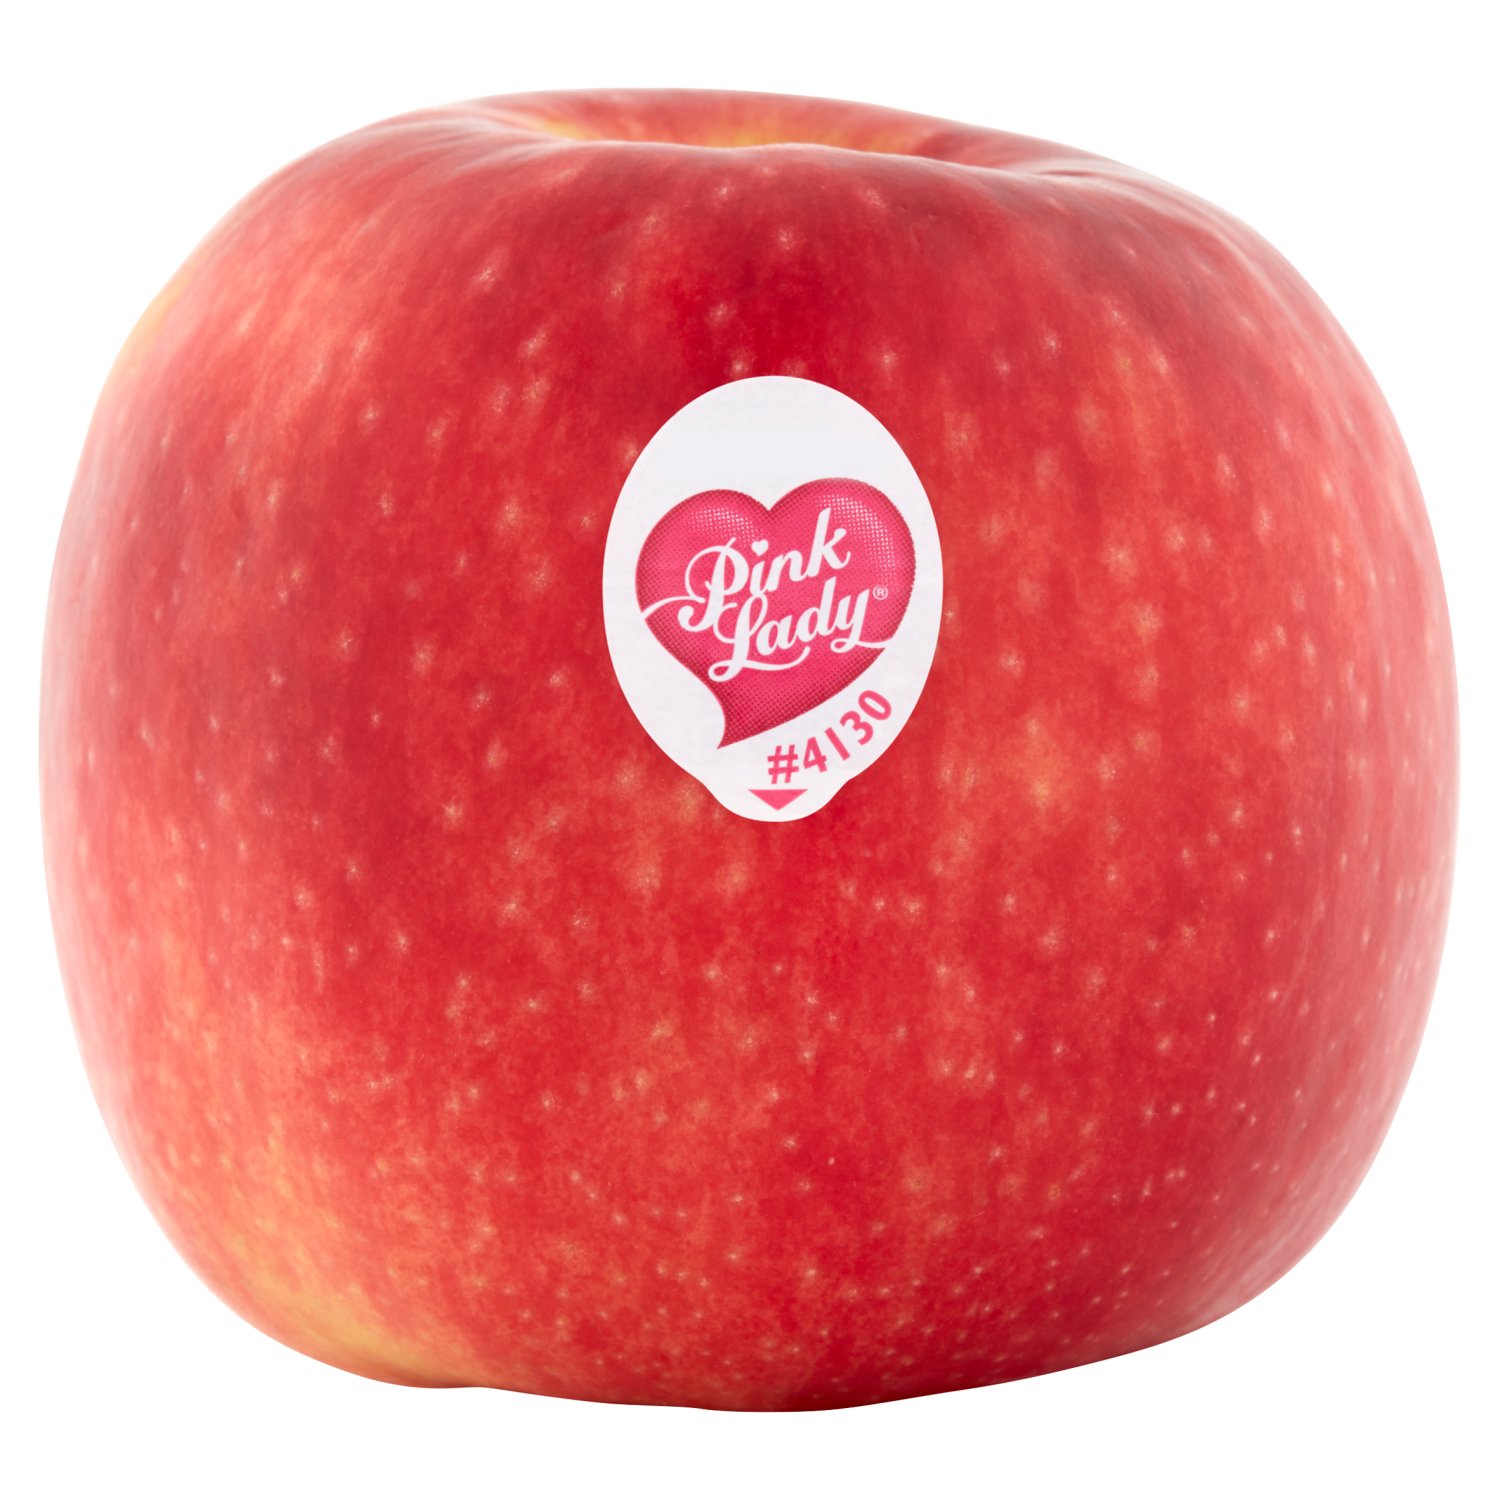 SuperValu Loose Pink Lady Apples (1 Piece)